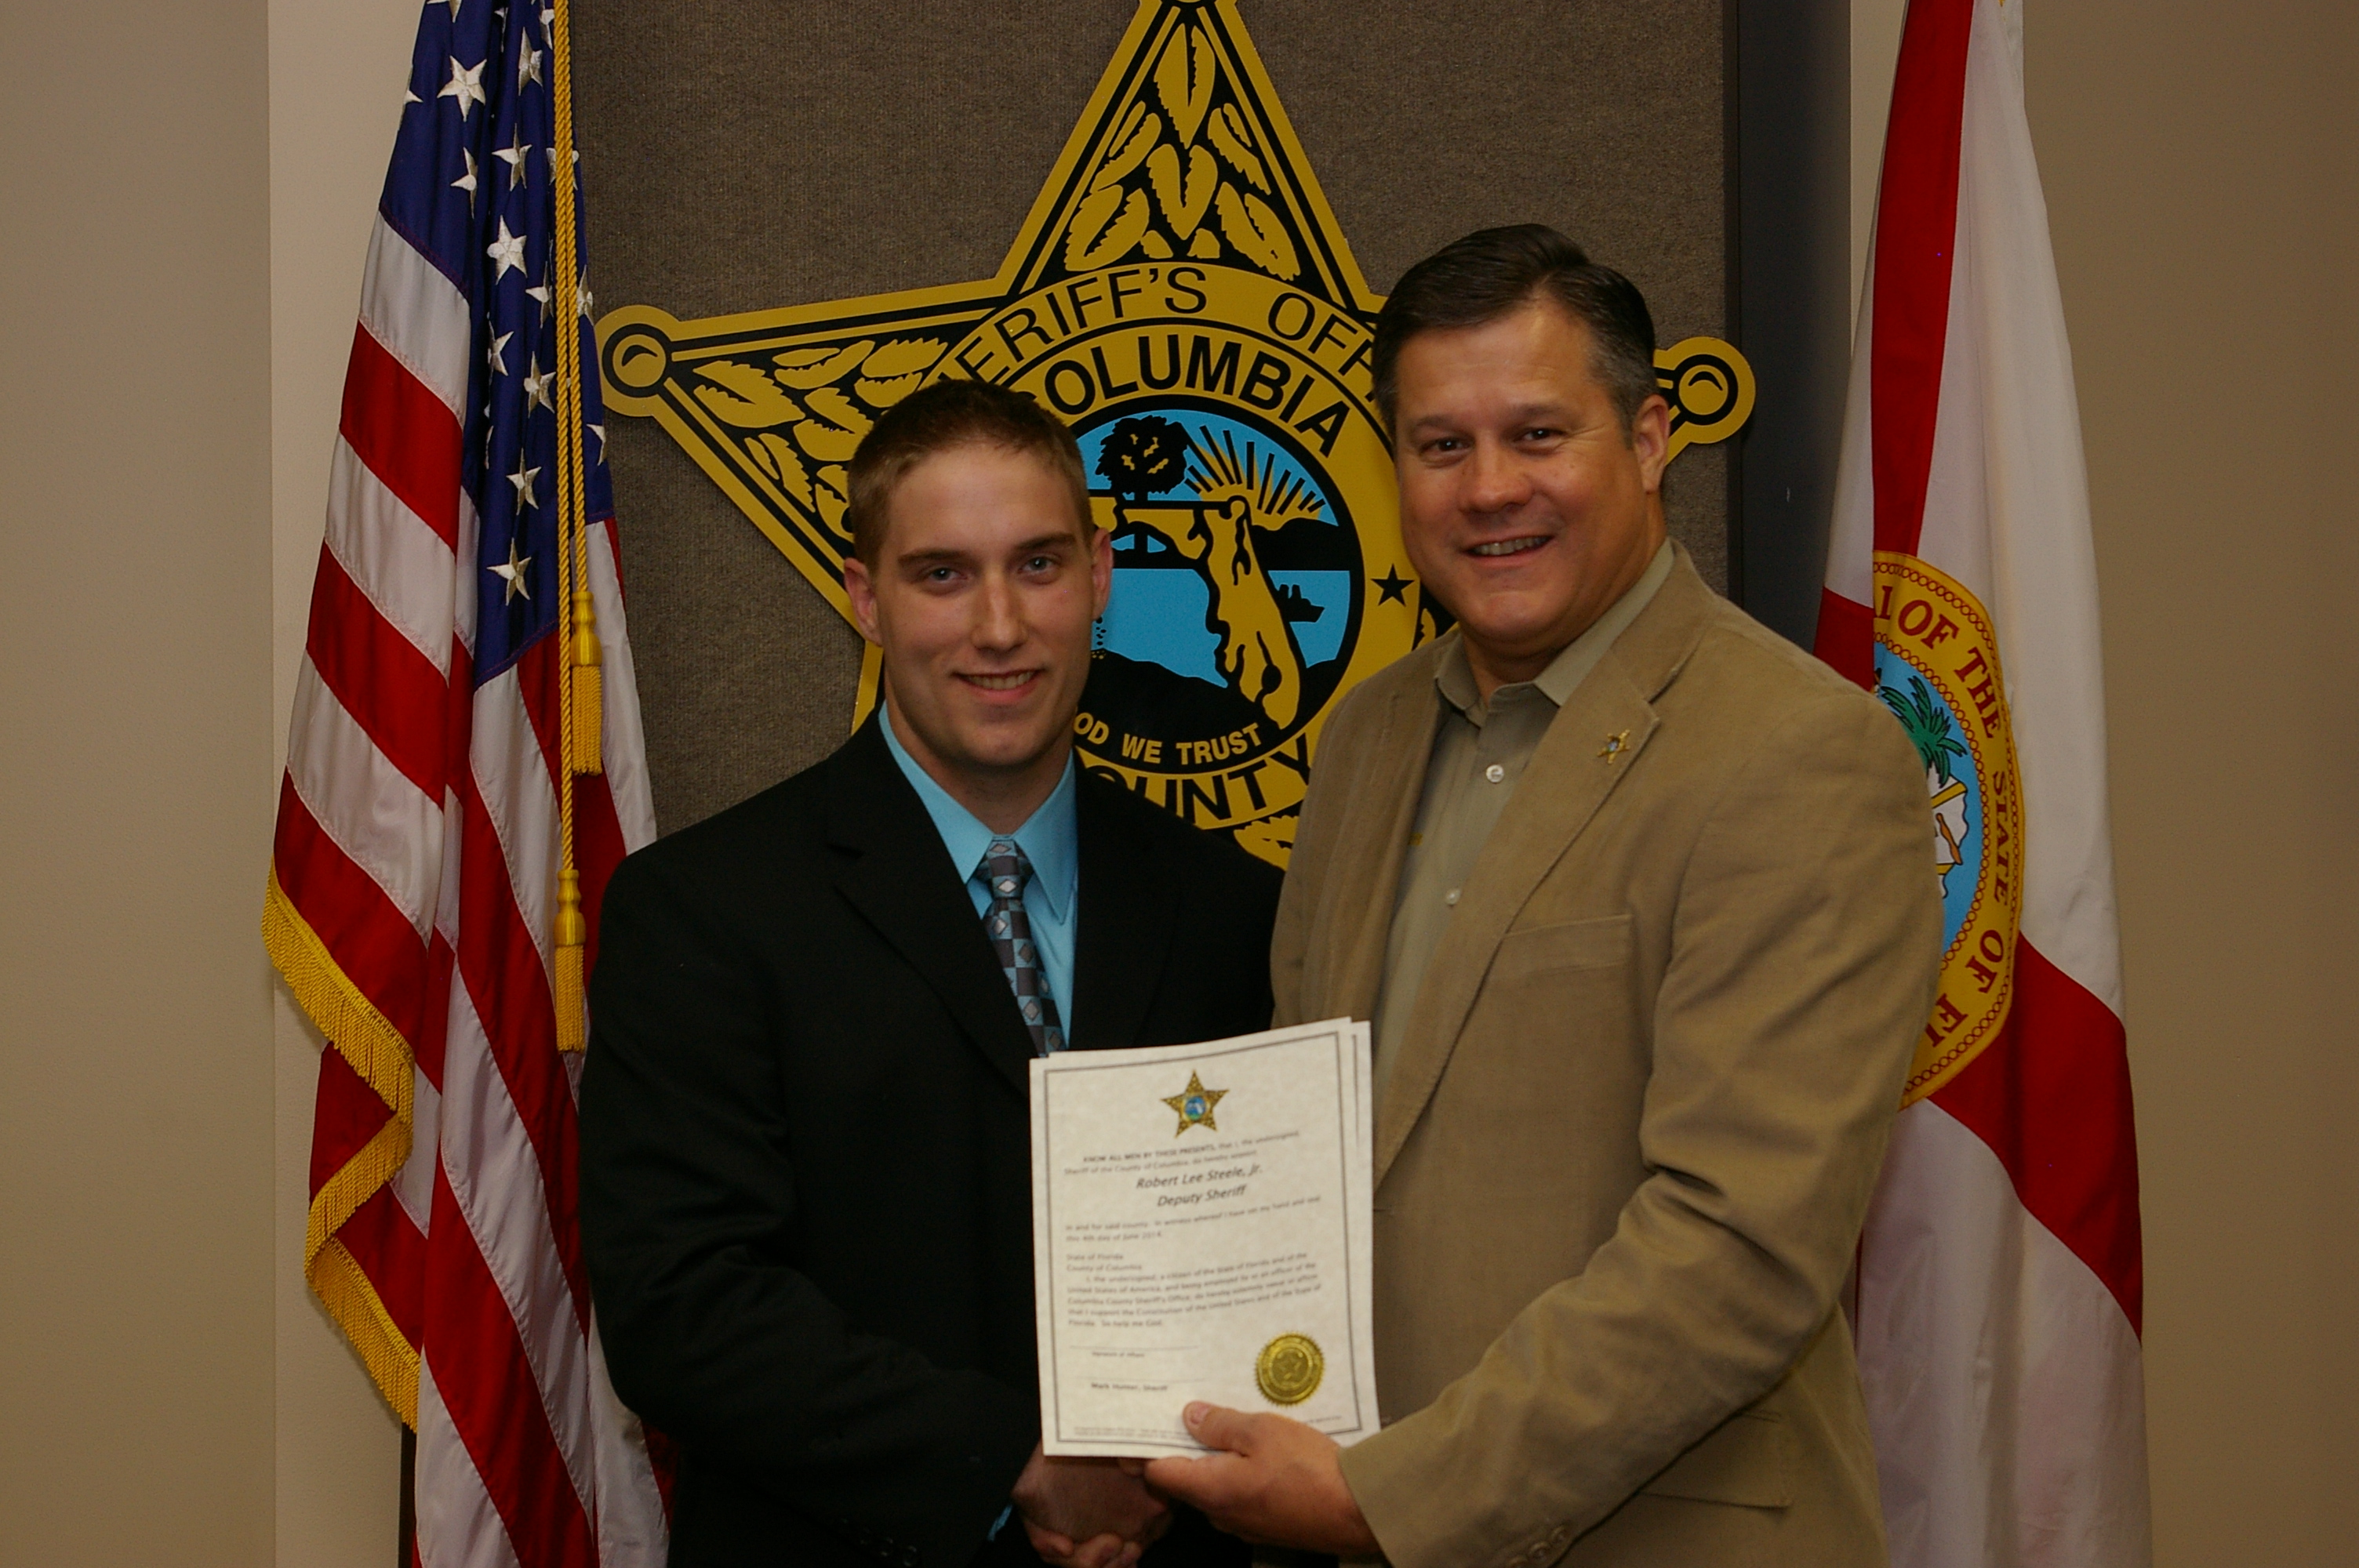 Deputy Sheriff Robert Steele and Sheriff Mark Hunter